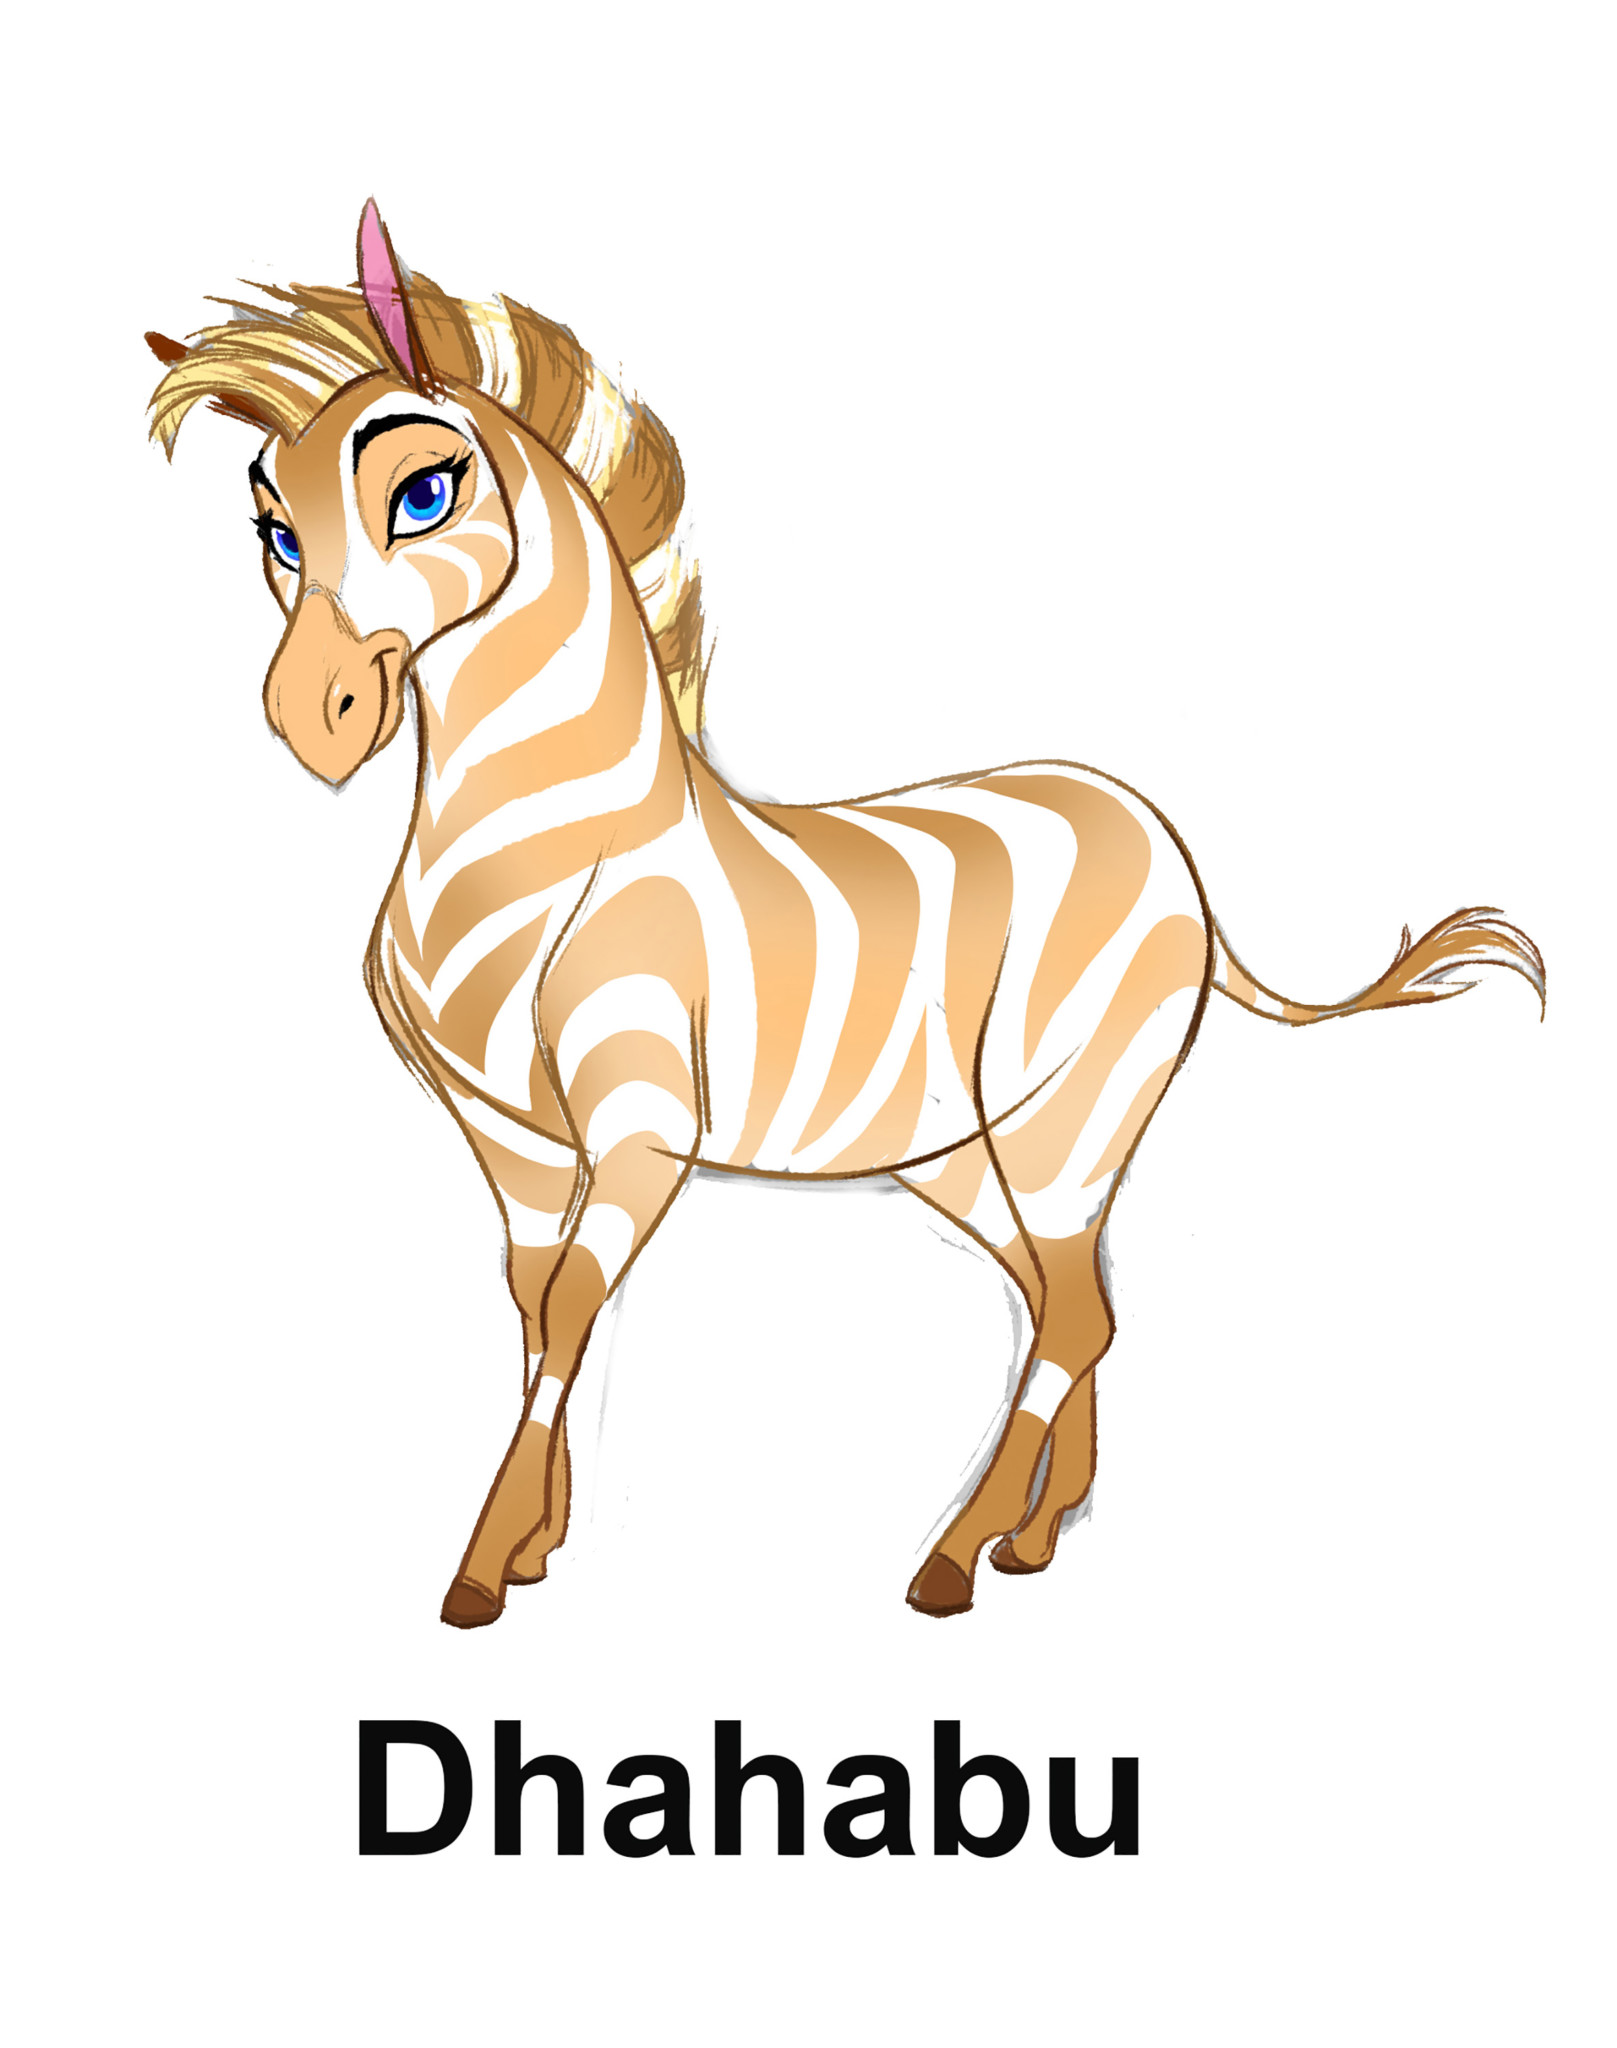 Dhahabu the Golden Zebra of Disney Junior's The Lion Guard (voiced by guest star Renée Elise Goldsberry)